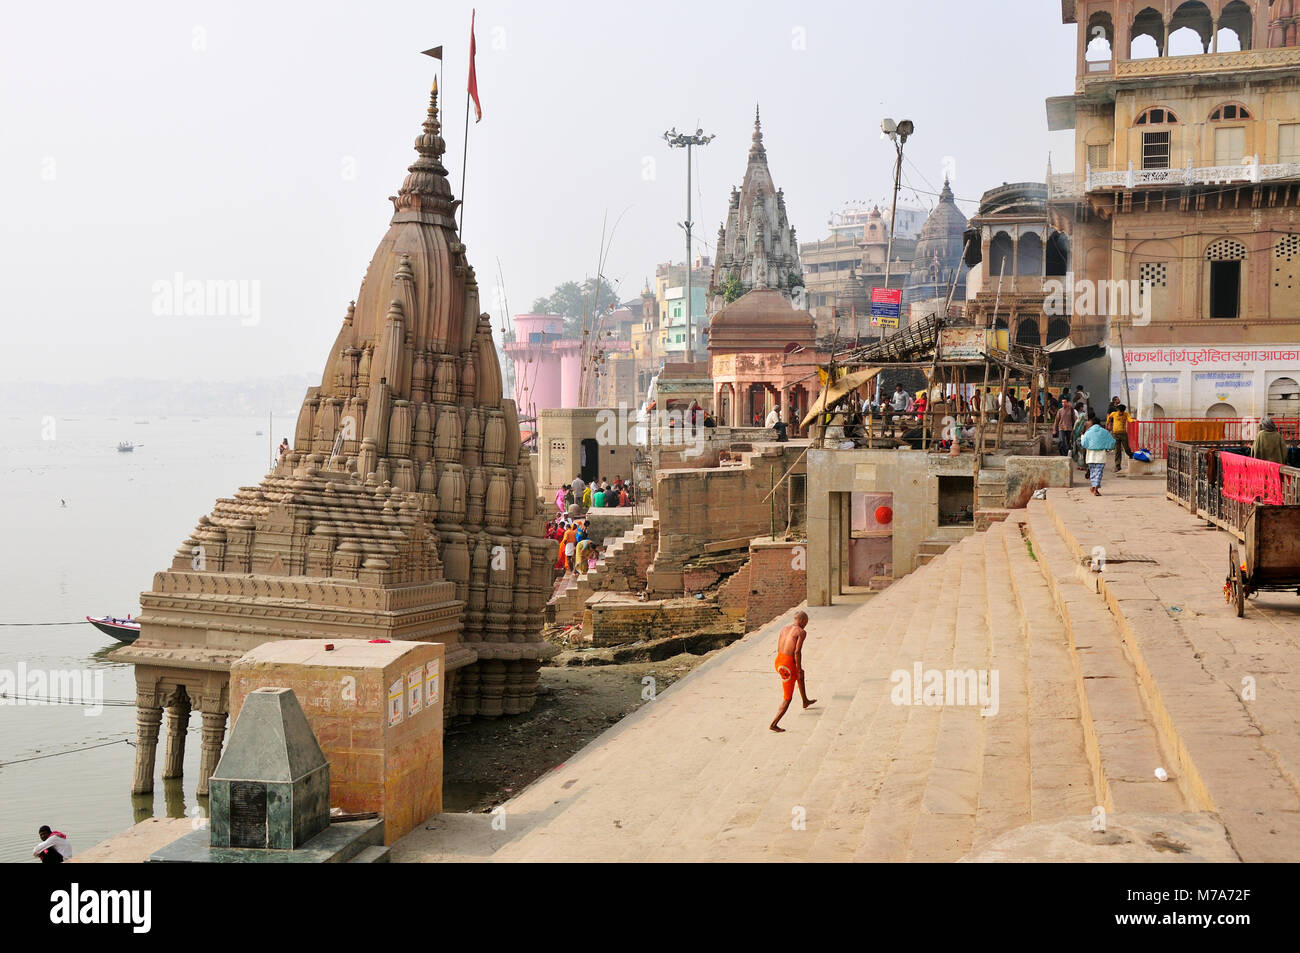 Manikarnika ghat (un spot de crémation) le long des rives du Gange, Varanasi, Inde Banque D'Images